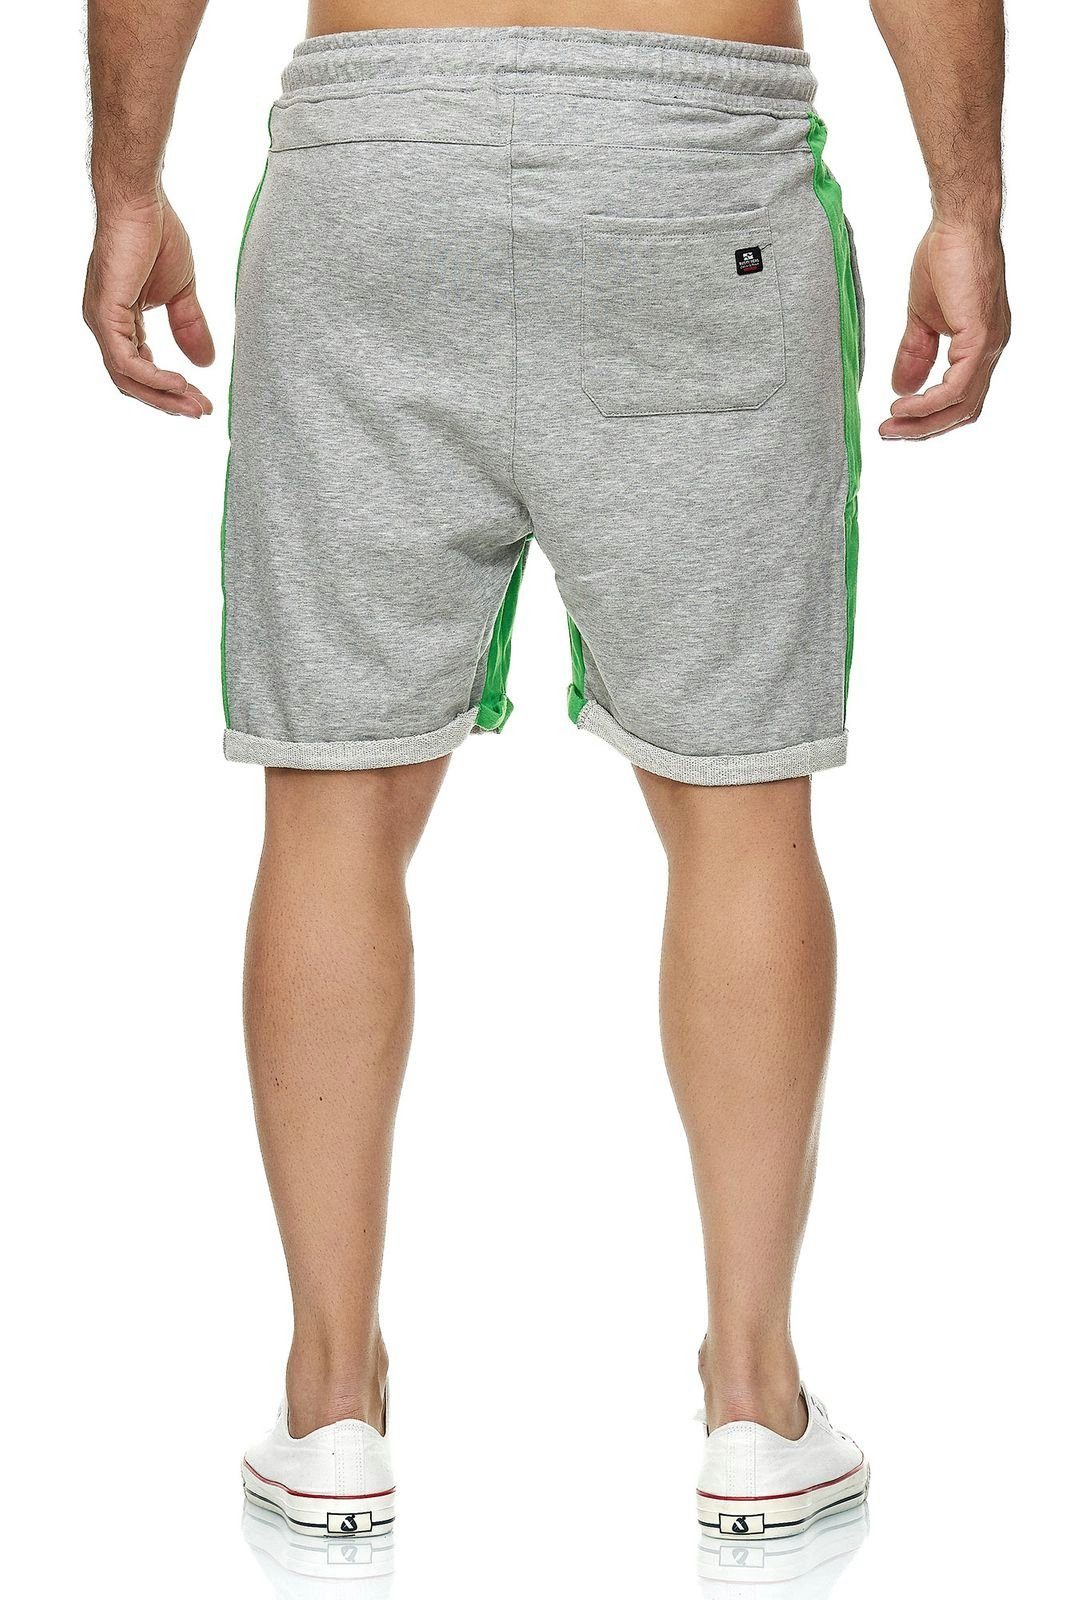 Shorts mit bequemem grau, Rusty Neal Tragekomfort grün